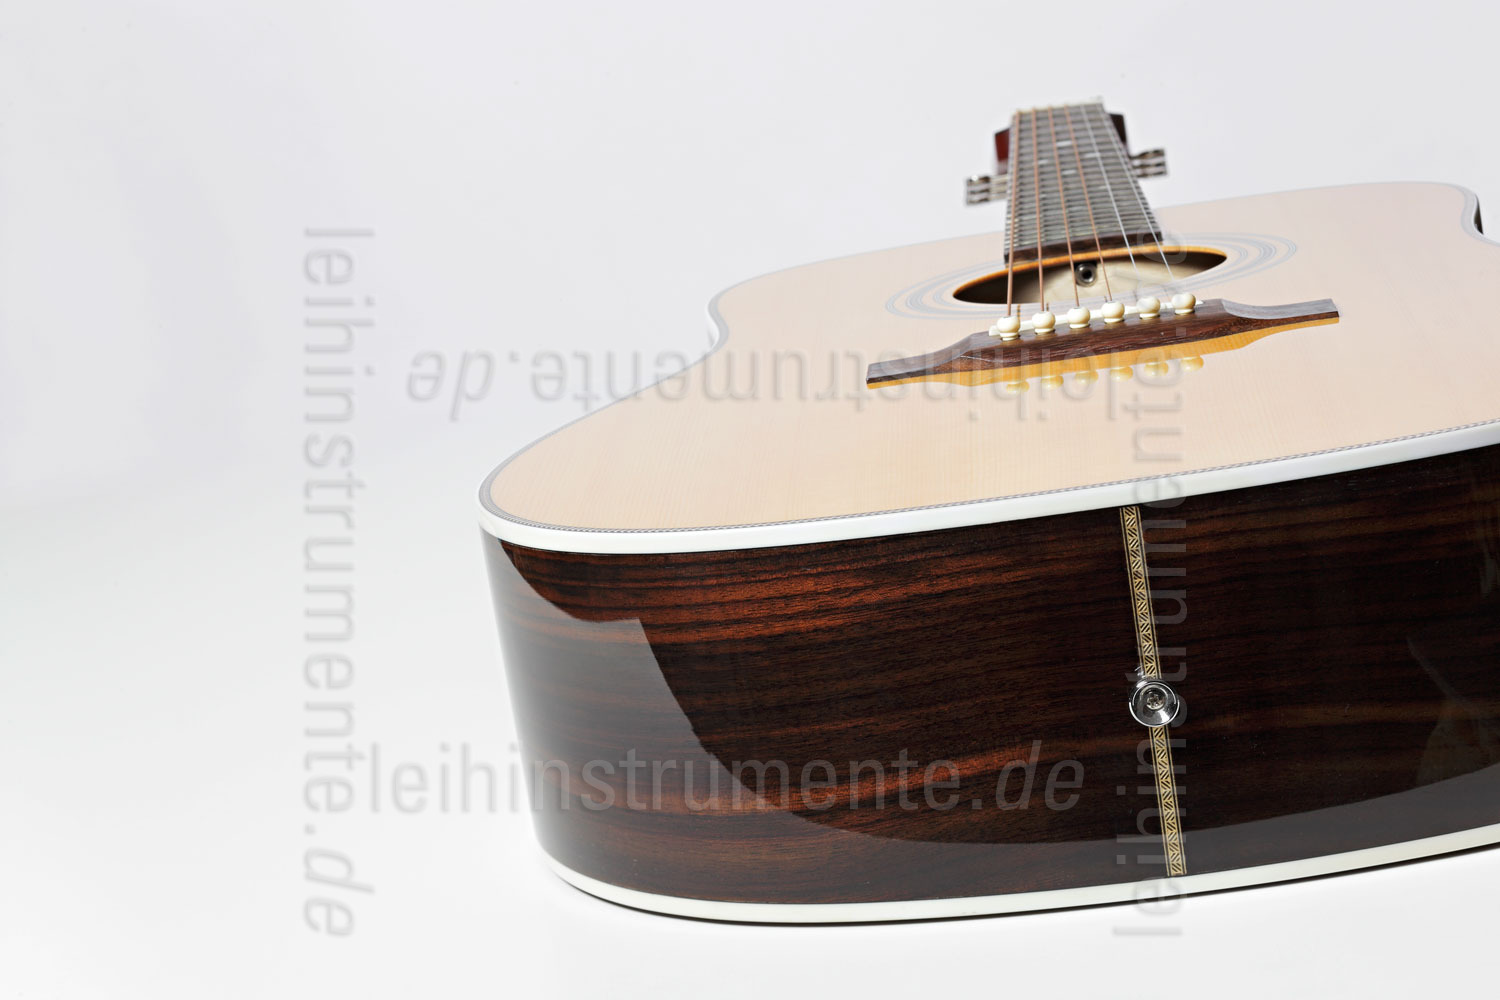 to article description / price Acoustic Guitar STANFORD DEJA VU SERIES DRUNKEN DADDY 28 - Dreadnought - solid top + back